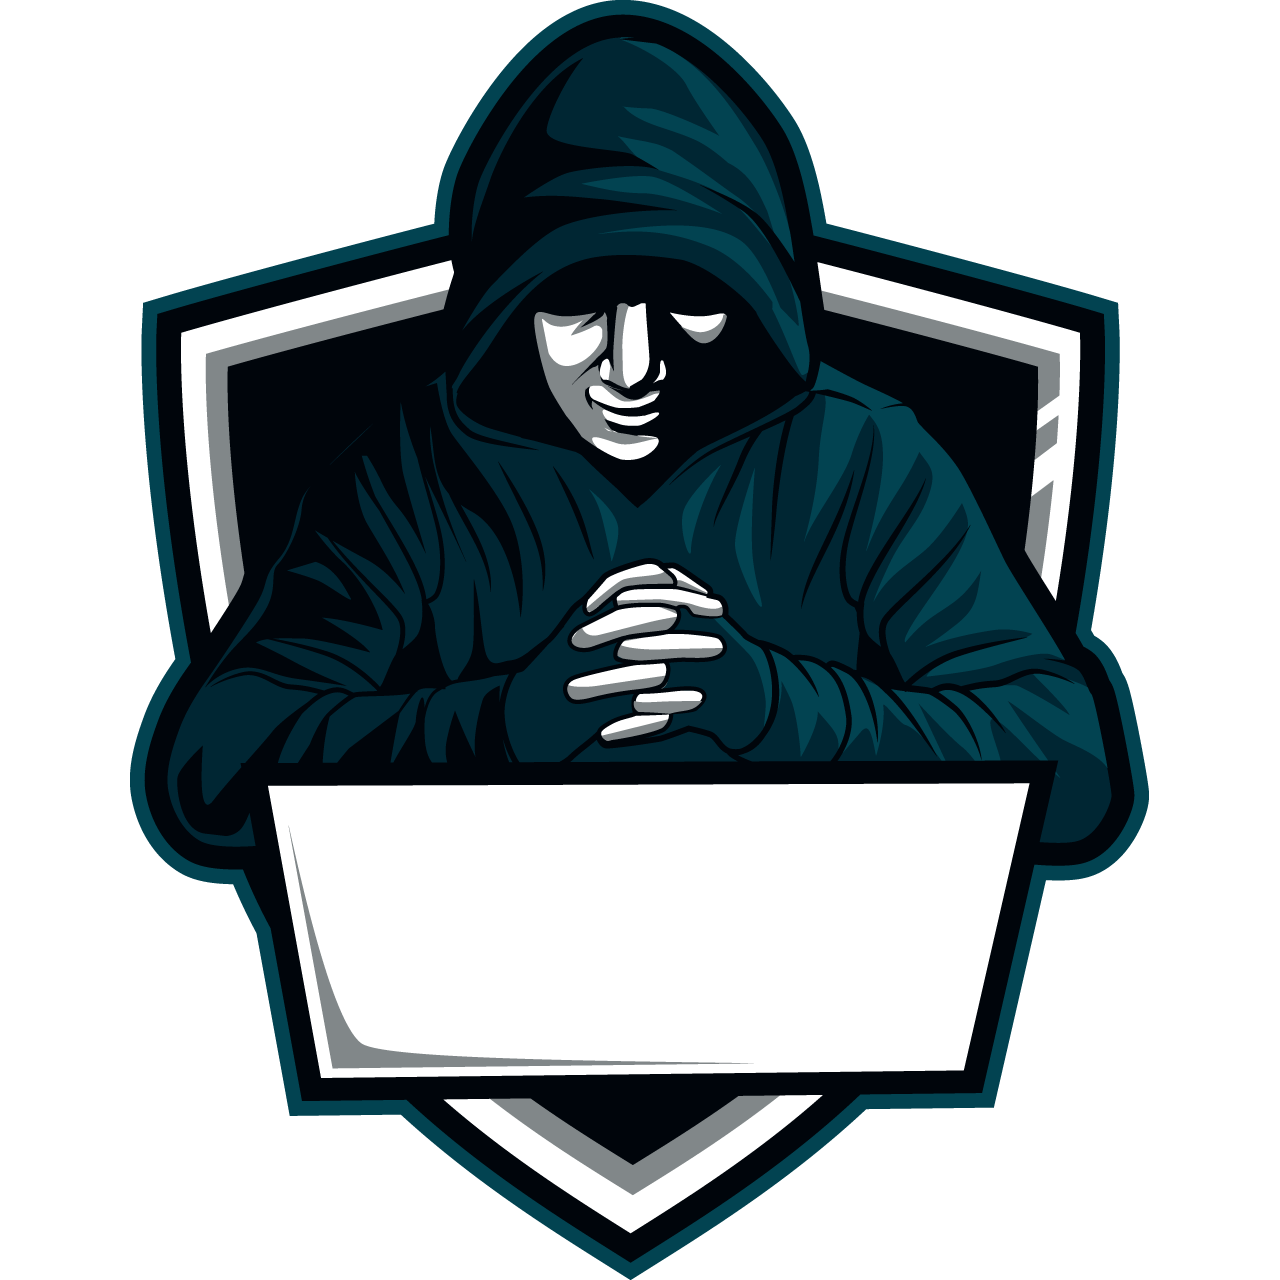 Hacker mascot sports esports logo cartoon illustration clipart image